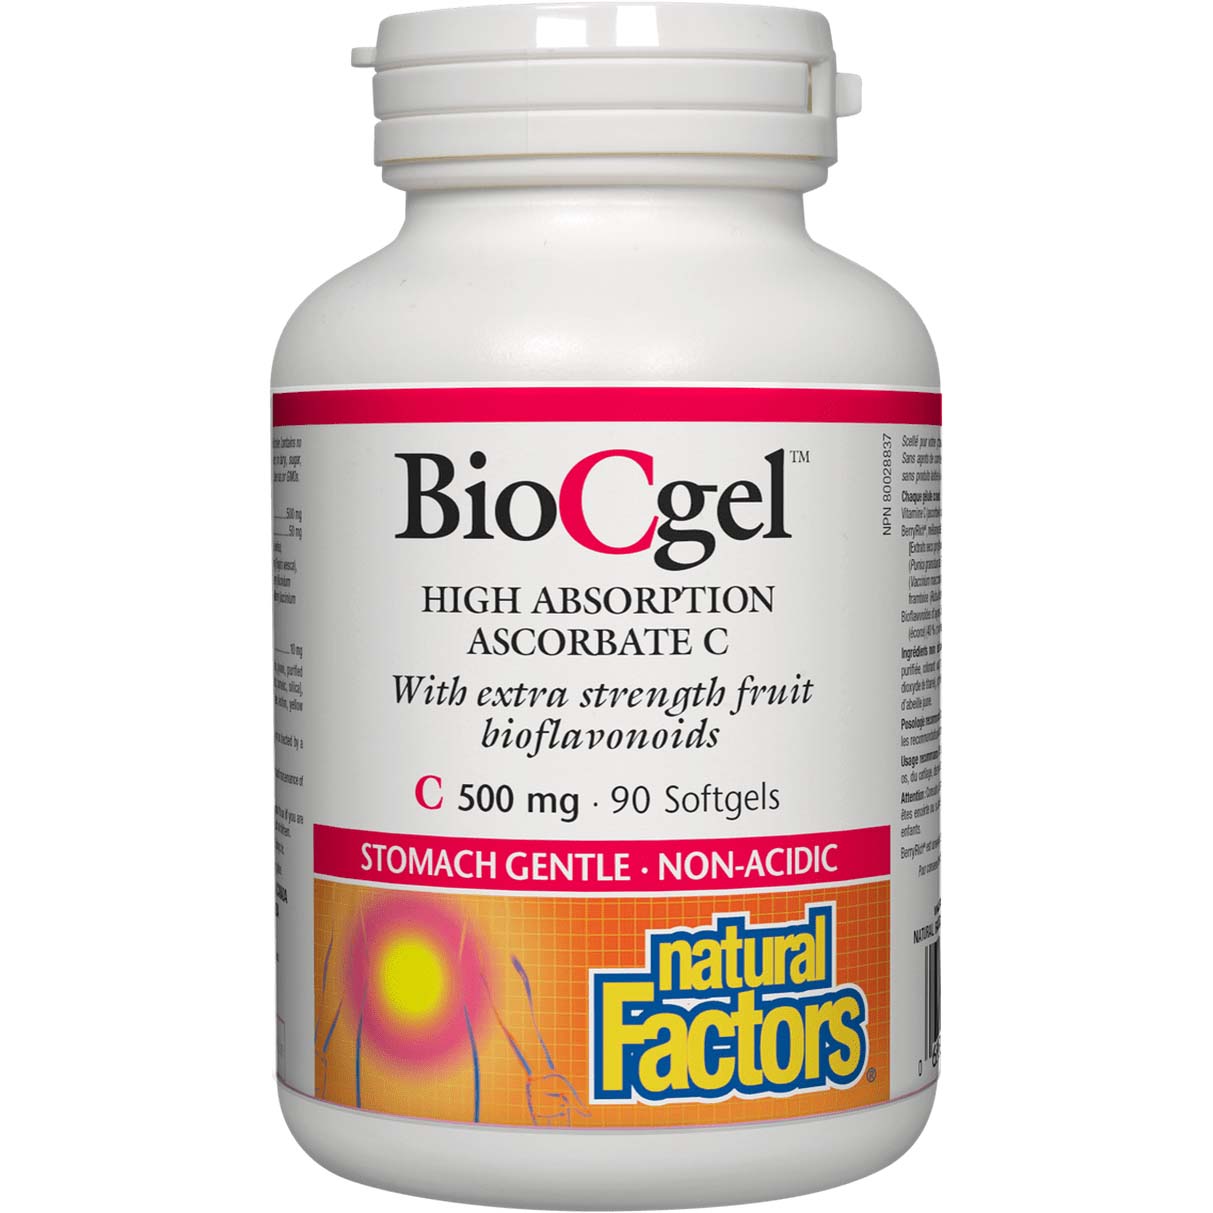 Natural Factors BioCgel High Absorption Ascorbate C 90 Softgels 500 mg